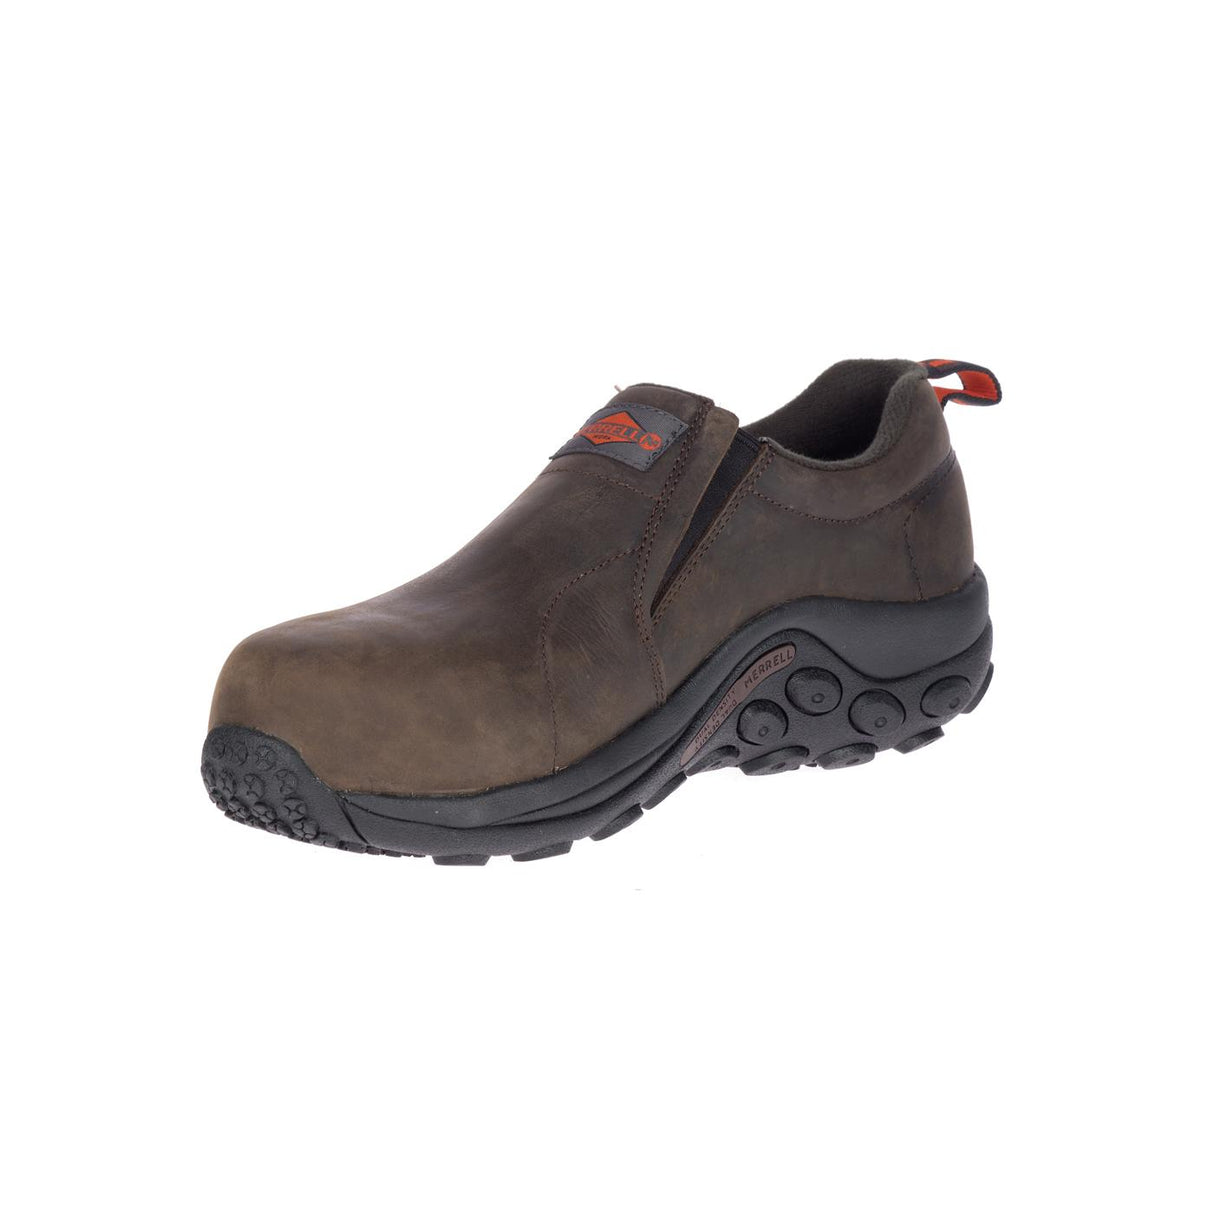 Jungle Moc Ltr Men's Composite-Toe Work Shoes Espresso-Men's Work Shoes-Merrell-Steel Toes